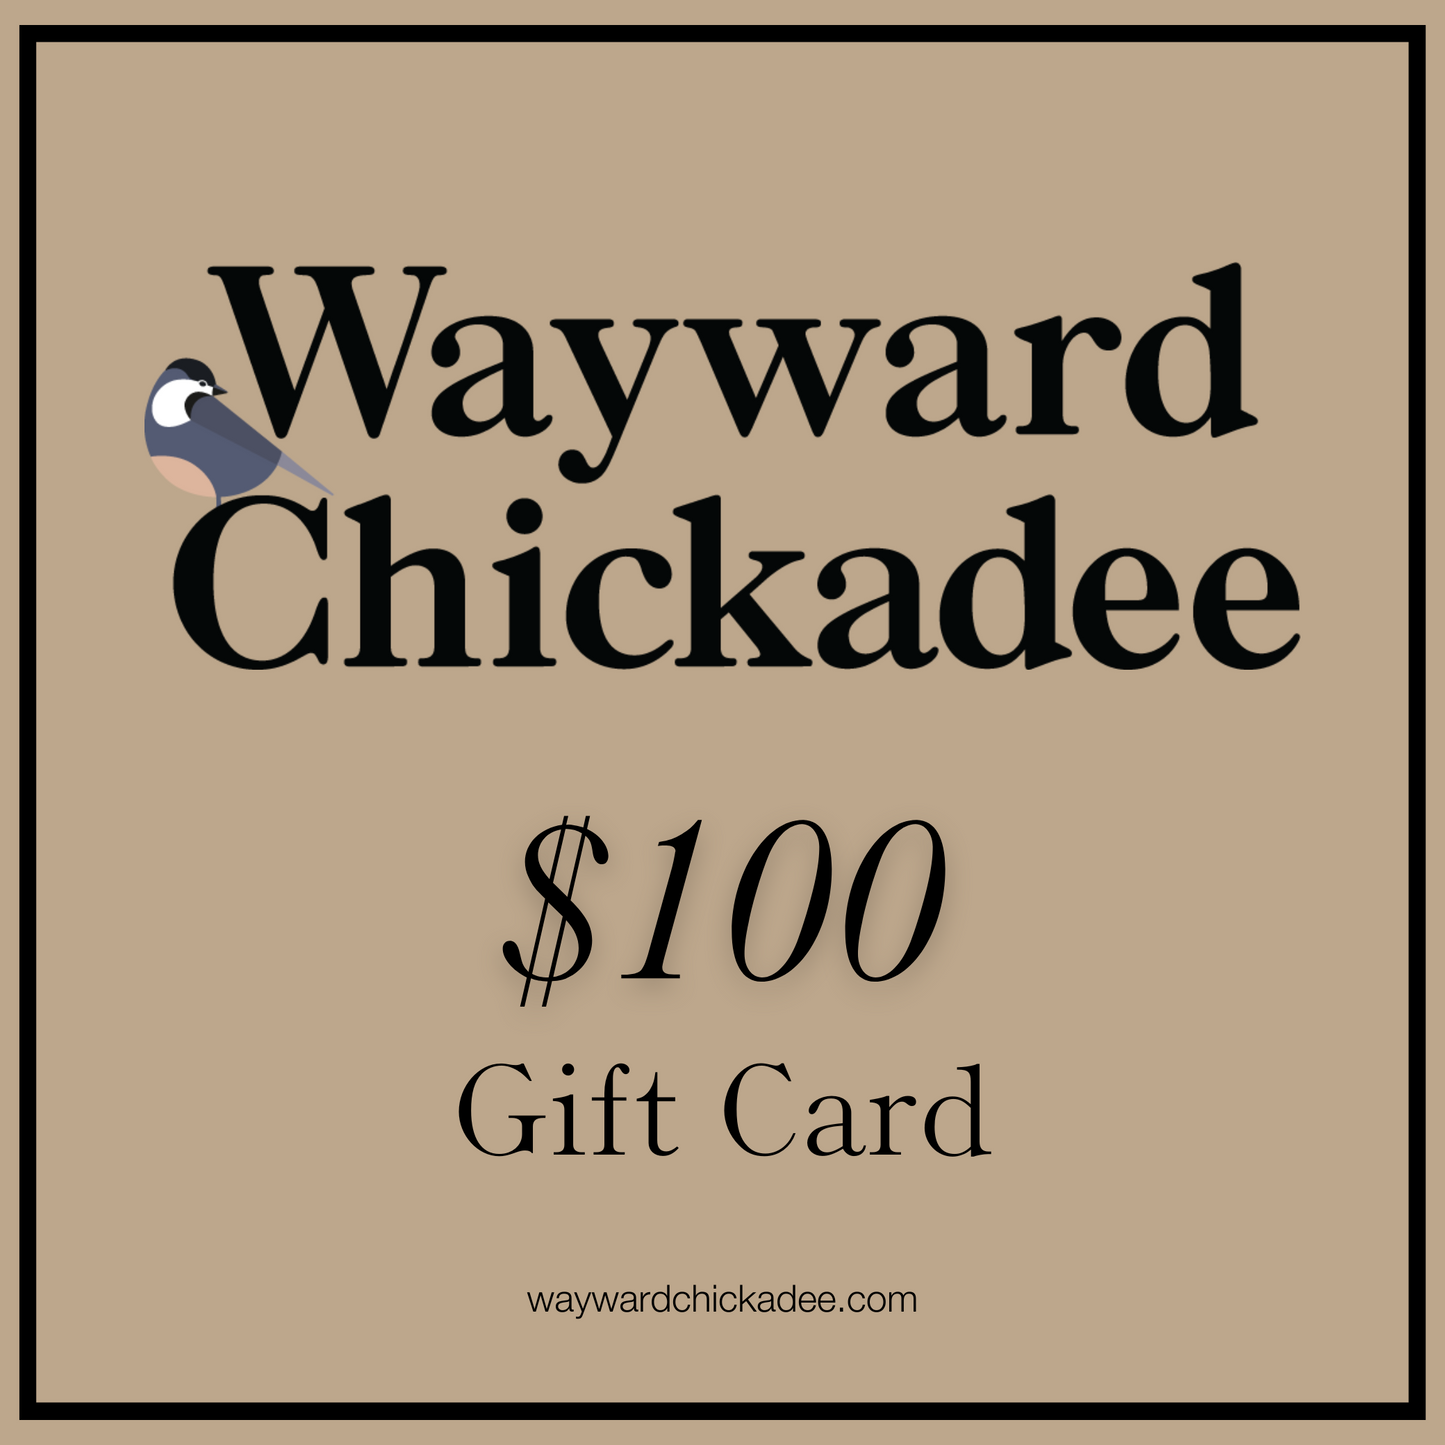 Gift Cards - Wayward Chickadee